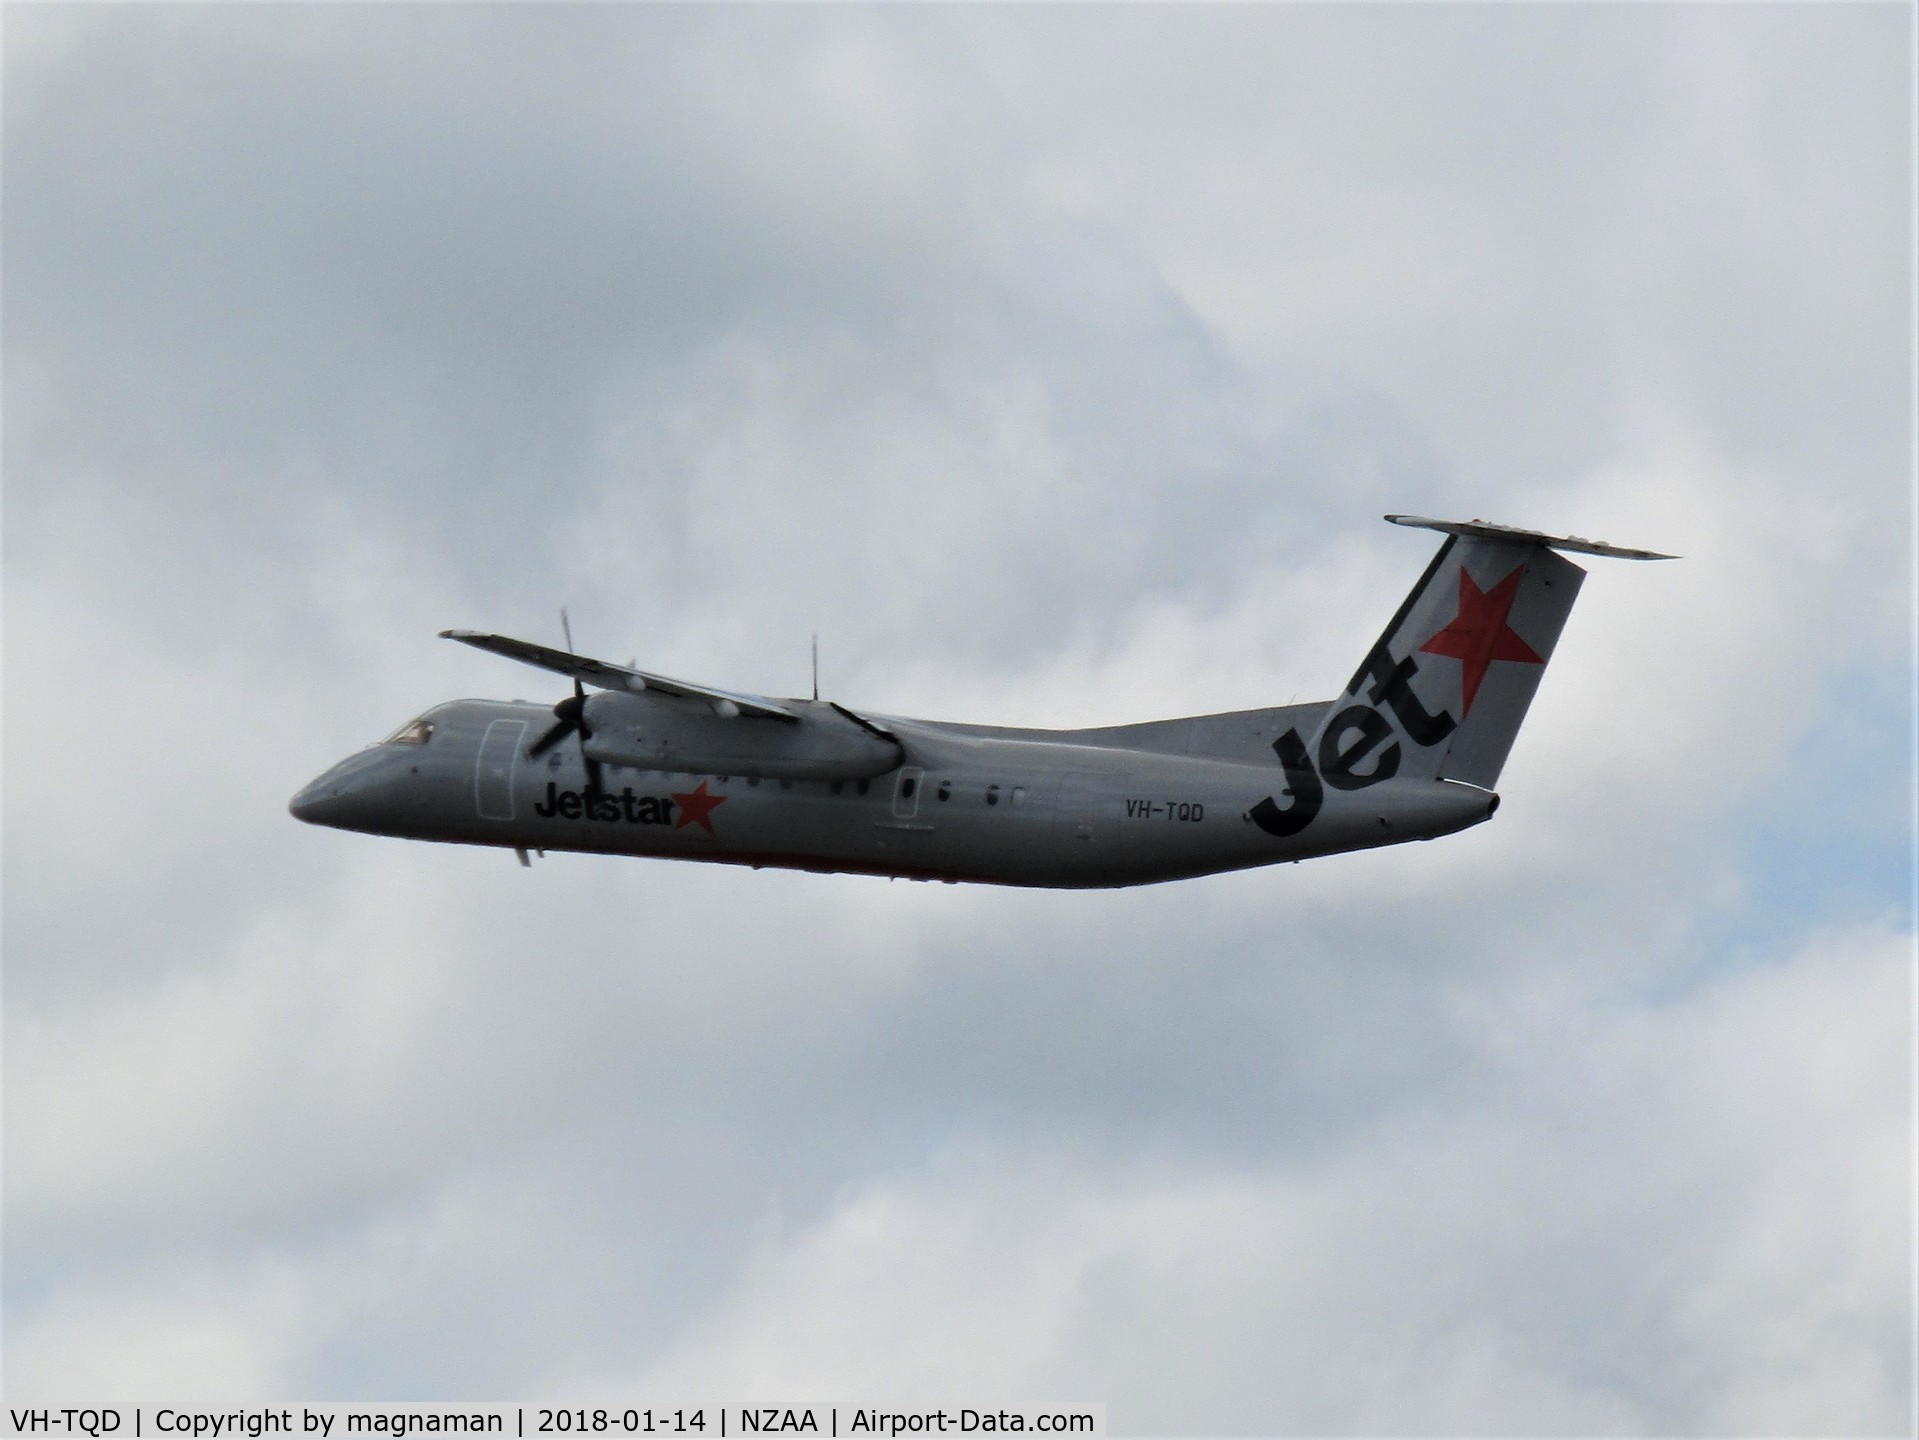 VH-TQD, 2004 De Havilland Canada DHC-8-315 Dash 8 C/N 598, away she goes